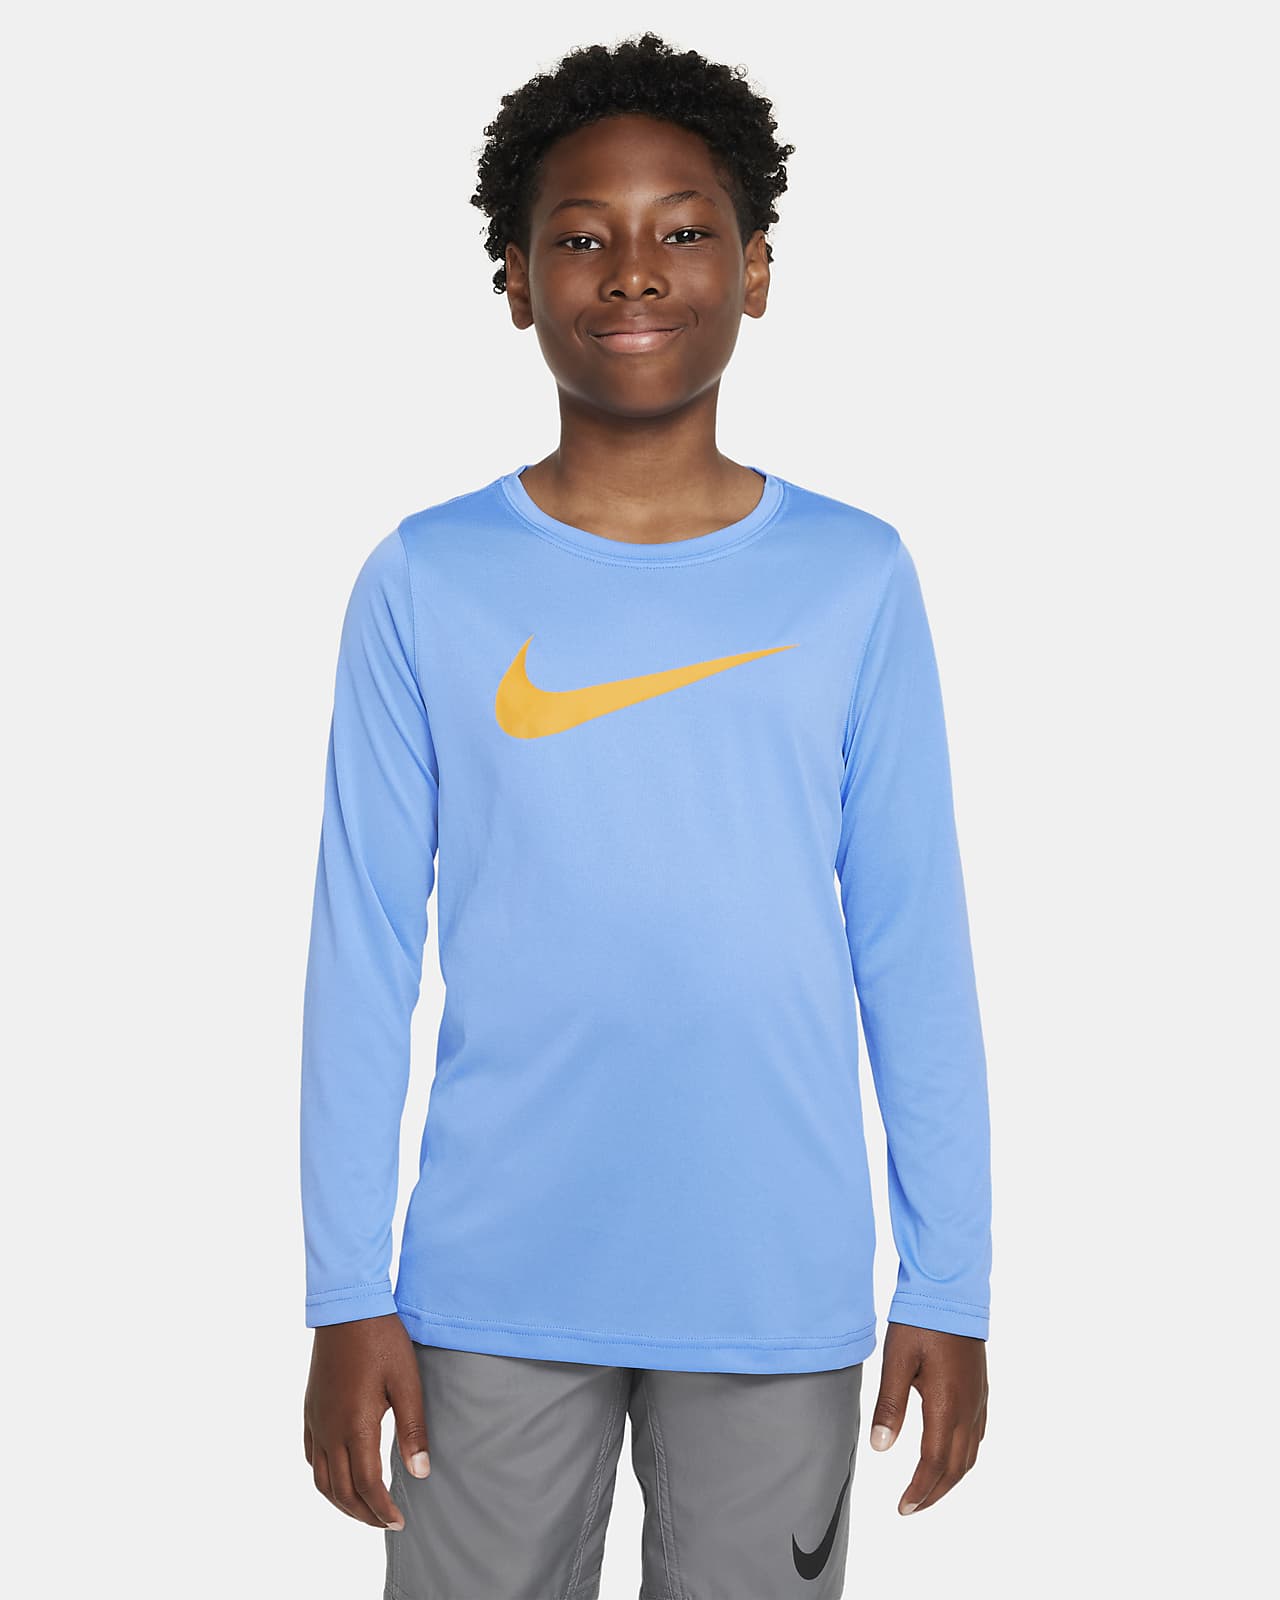 Nike Kids' T-Shirt - Blue